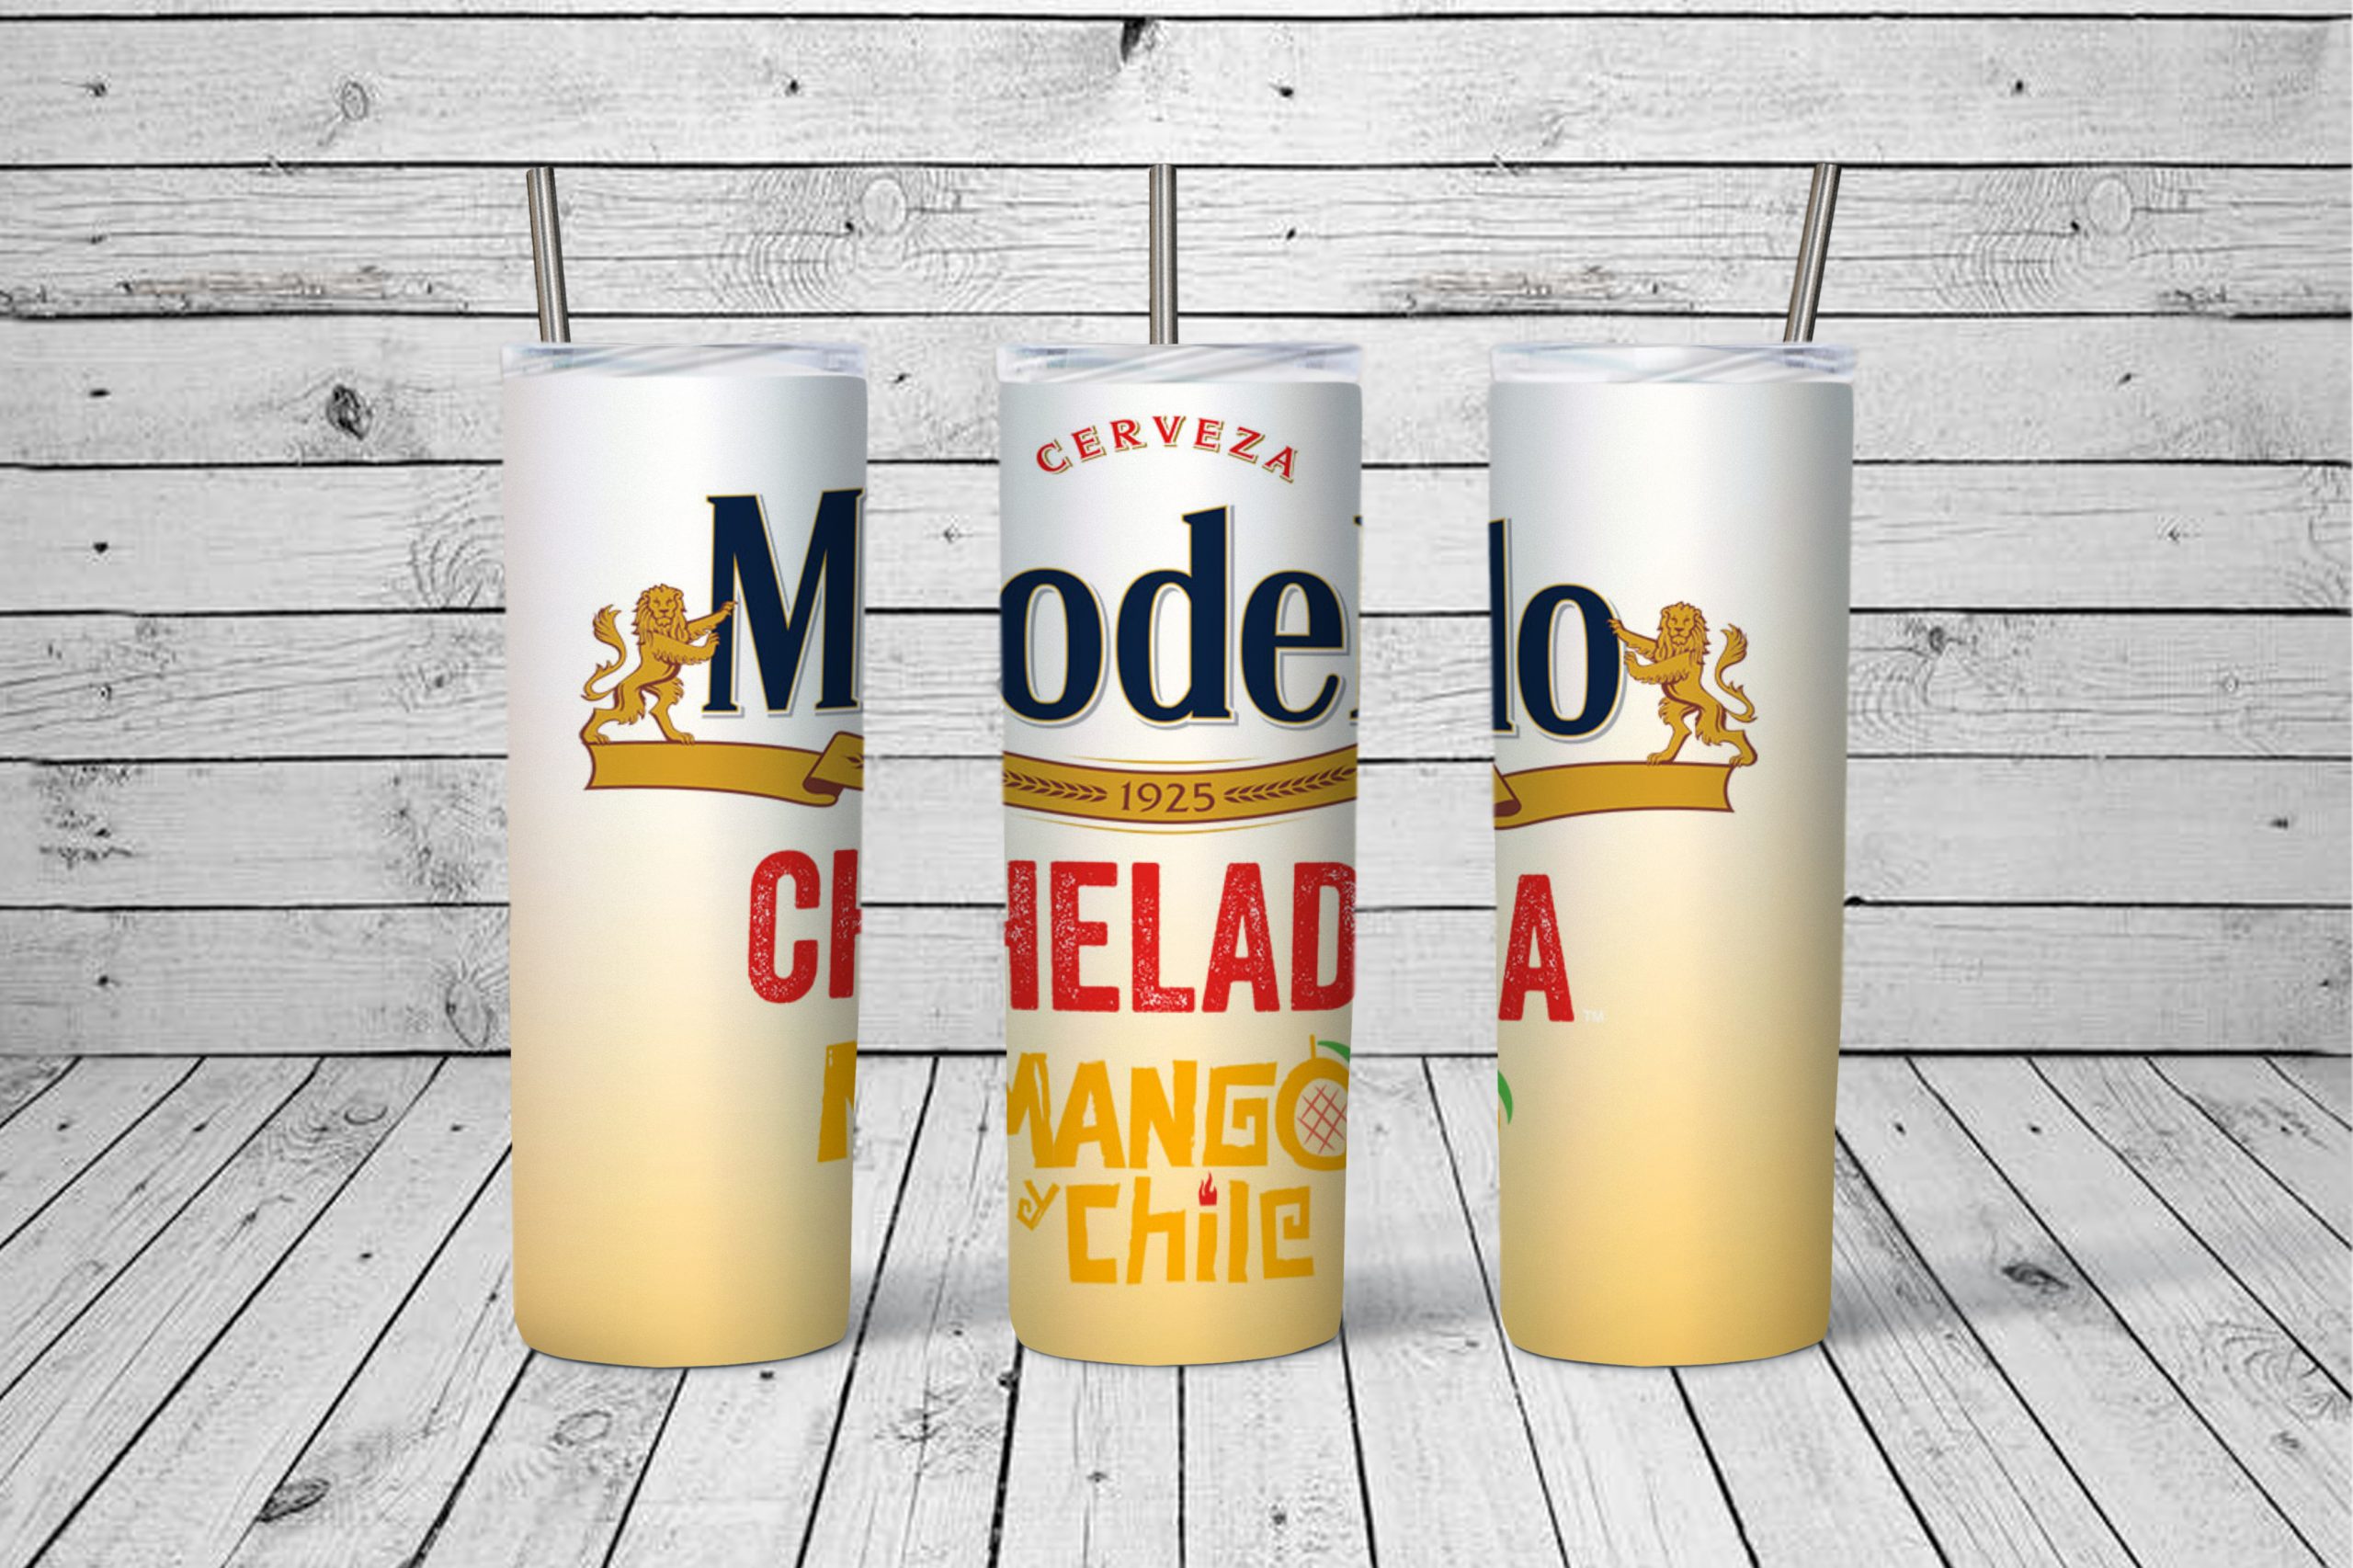 Modelo Chelada Mango y Chile design for 20 oz skinny tumbler